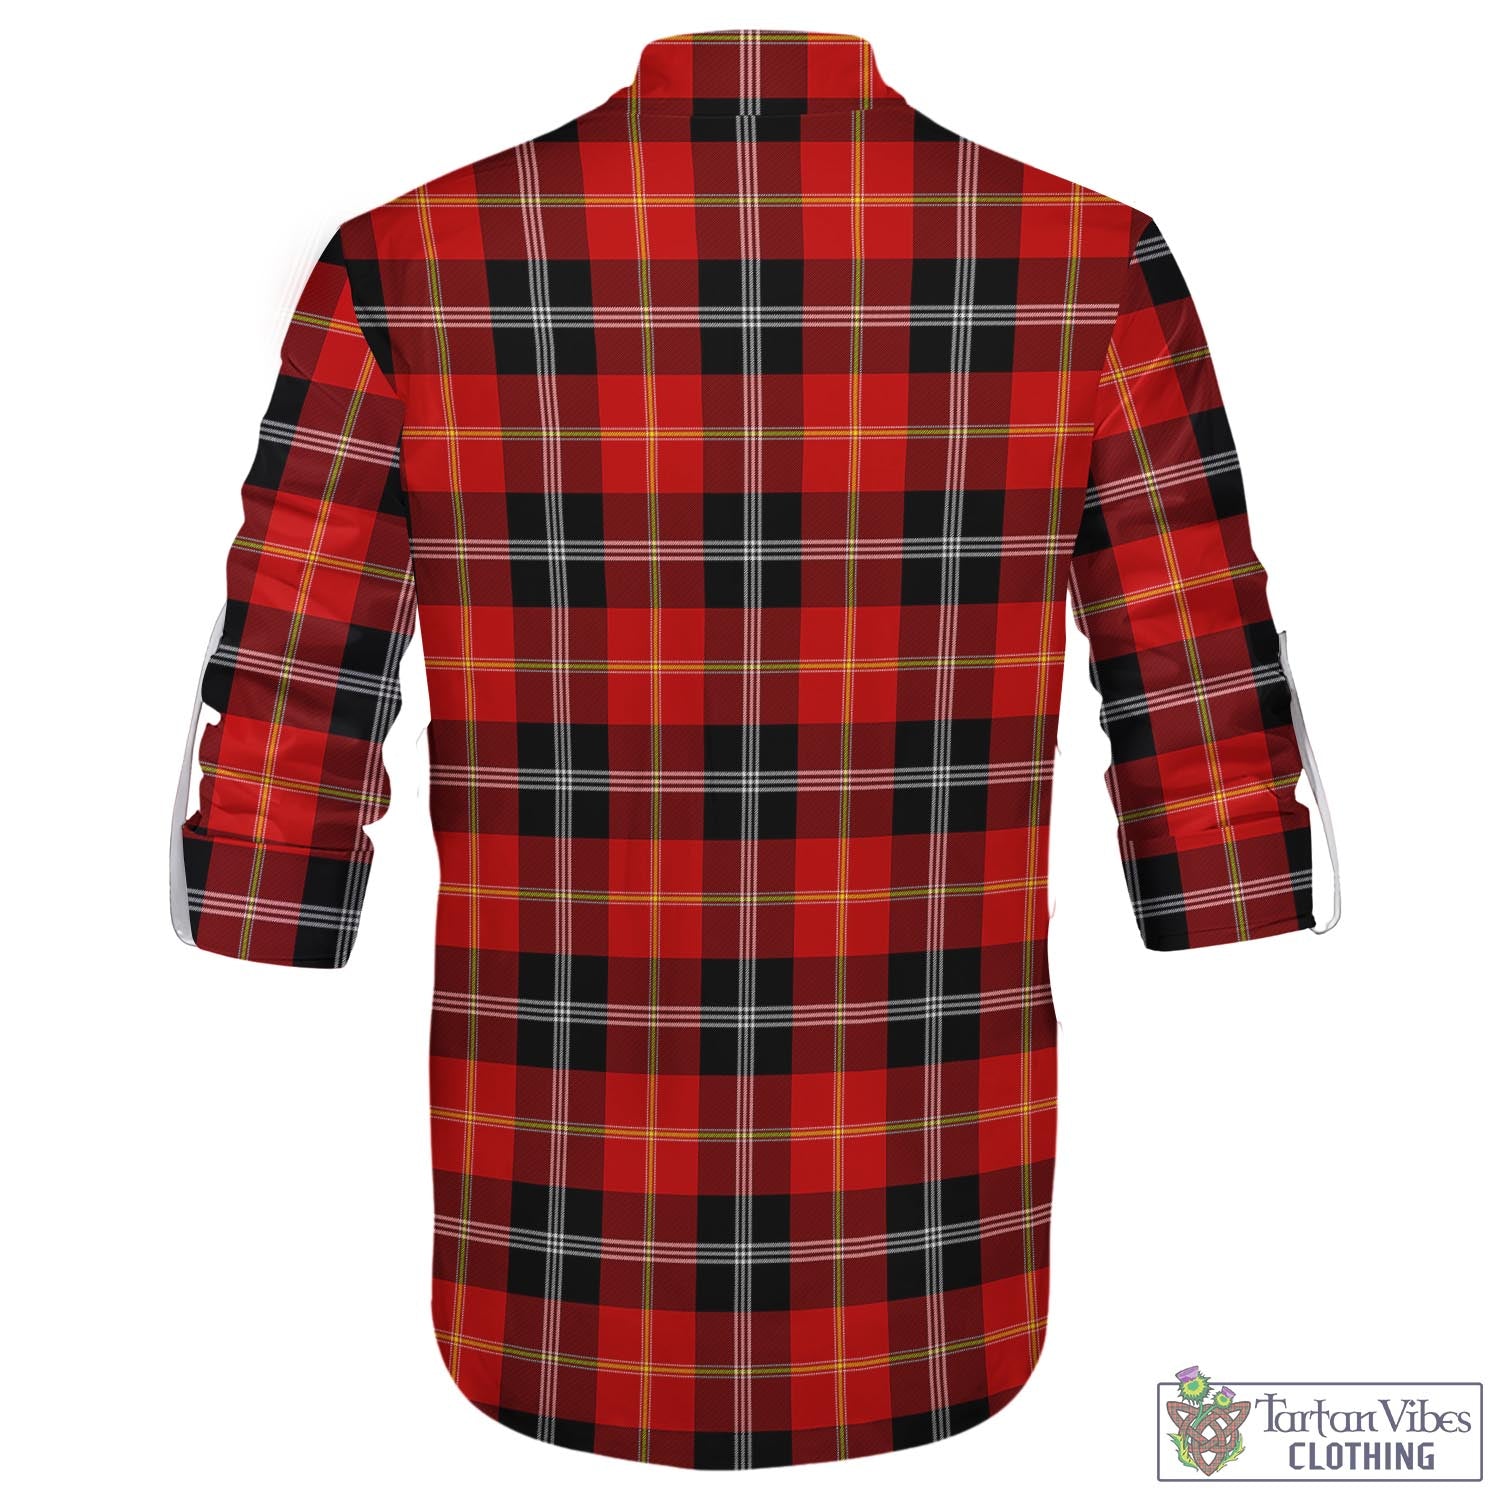 Tartan Vibes Clothing Majoribanks Tartan Men's Scottish Traditional Jacobite Ghillie Kilt Shirt